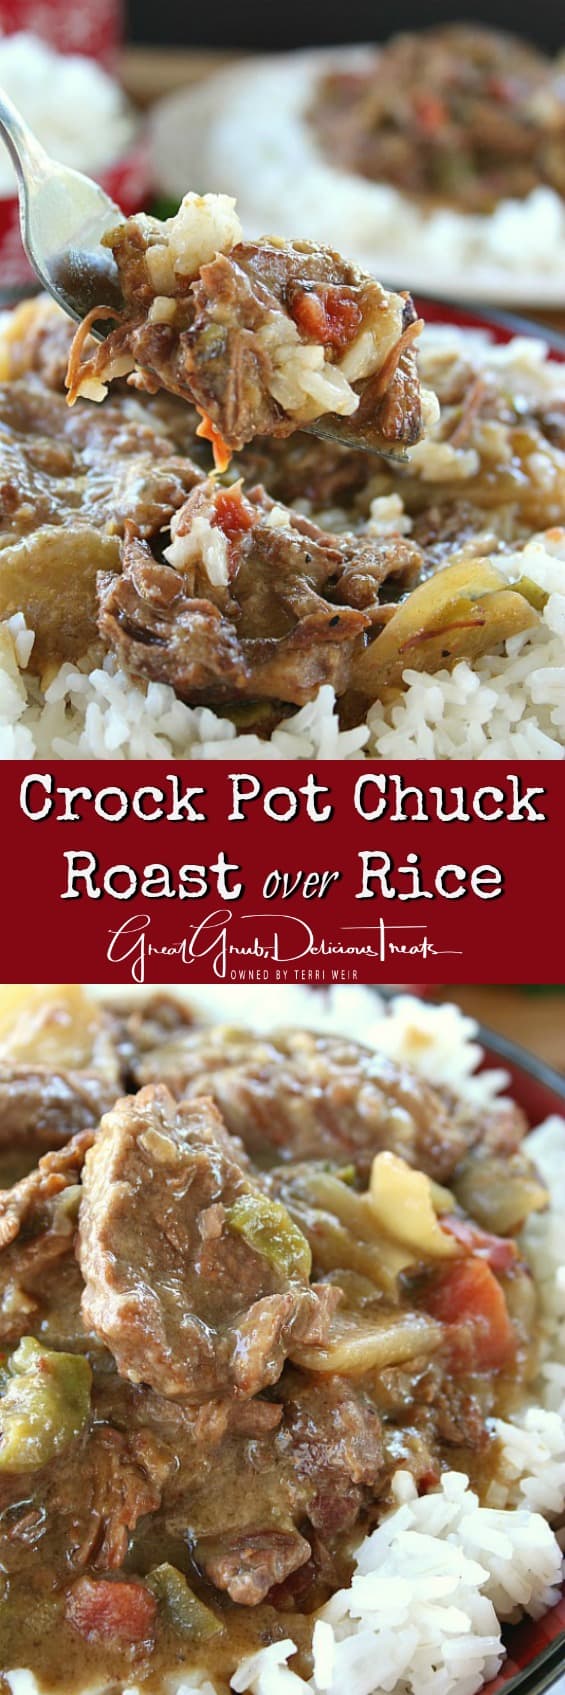 Crock Pot Chuck Roast Over Rice